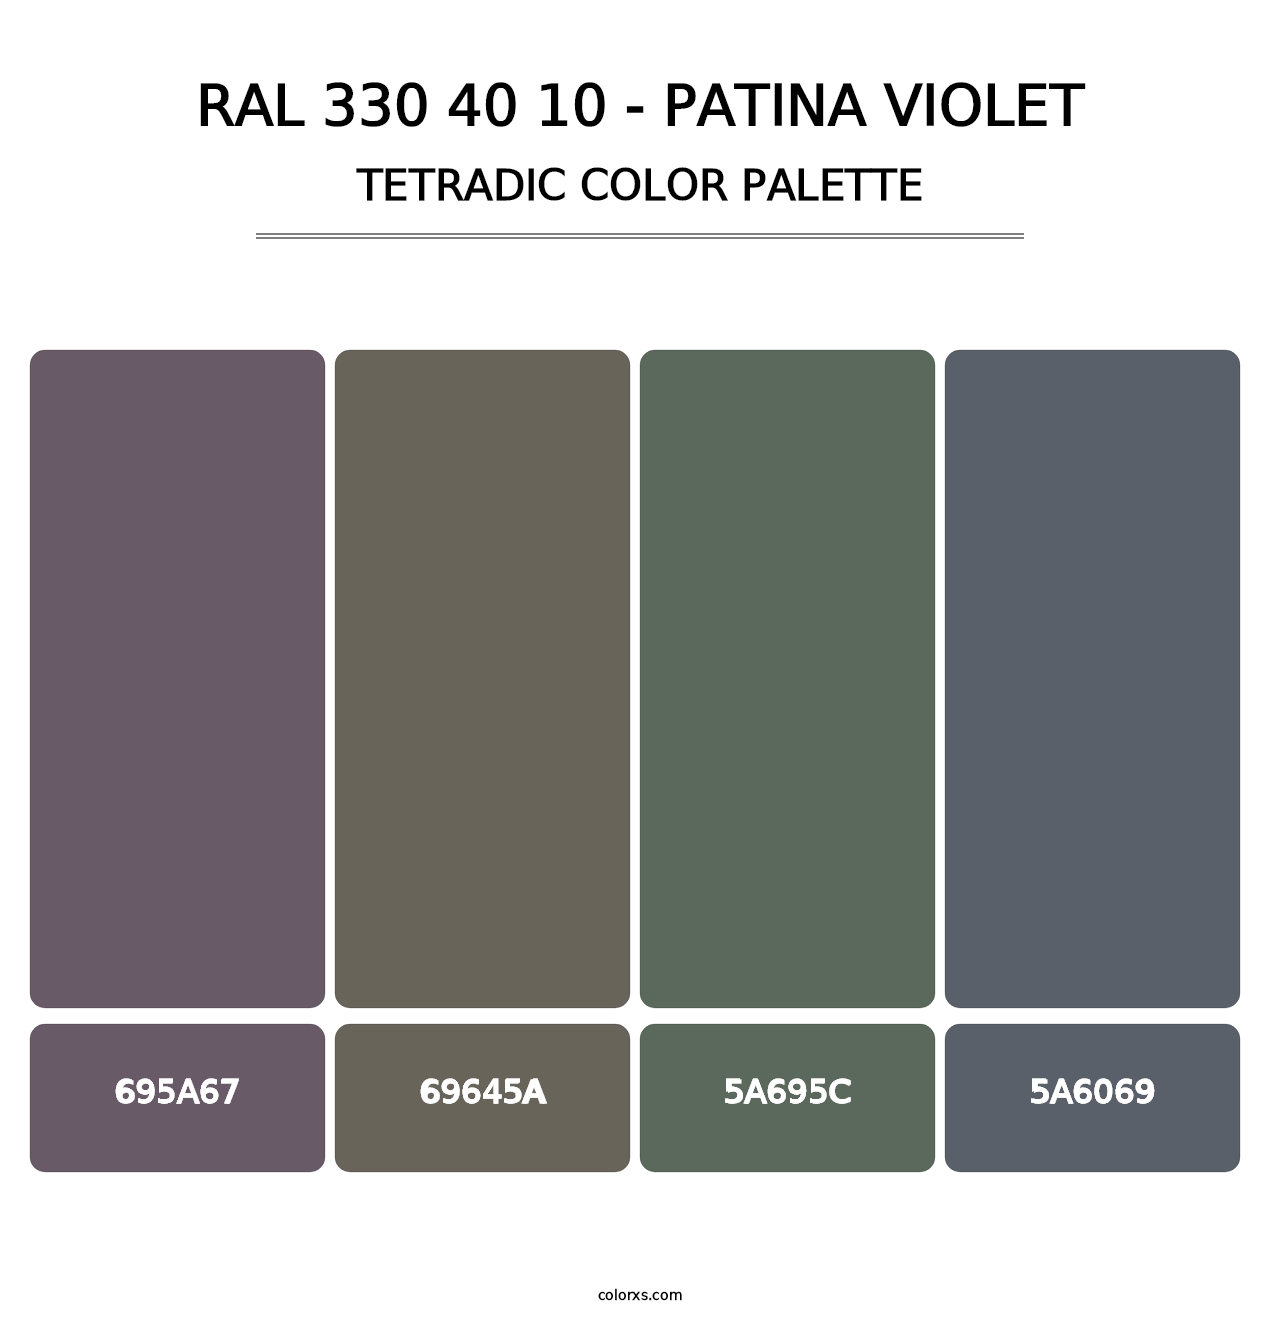 RAL 330 40 10 - Patina Violet - Tetradic Color Palette